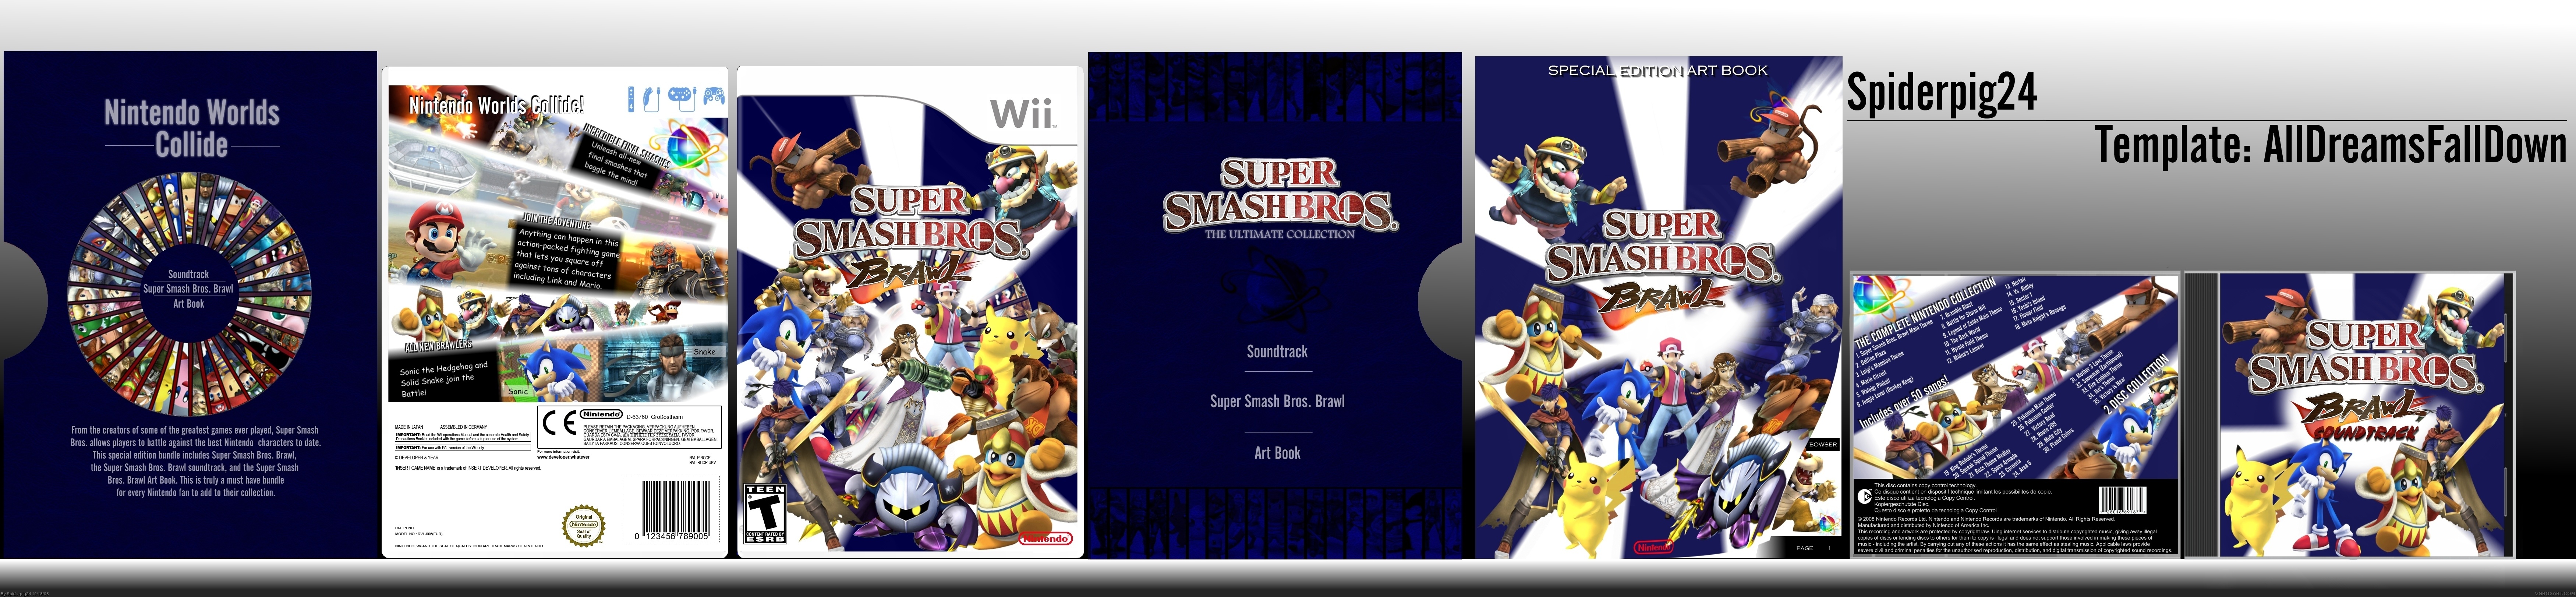 Super Smash Bros. Brawl: The Ultimate Collection box cover